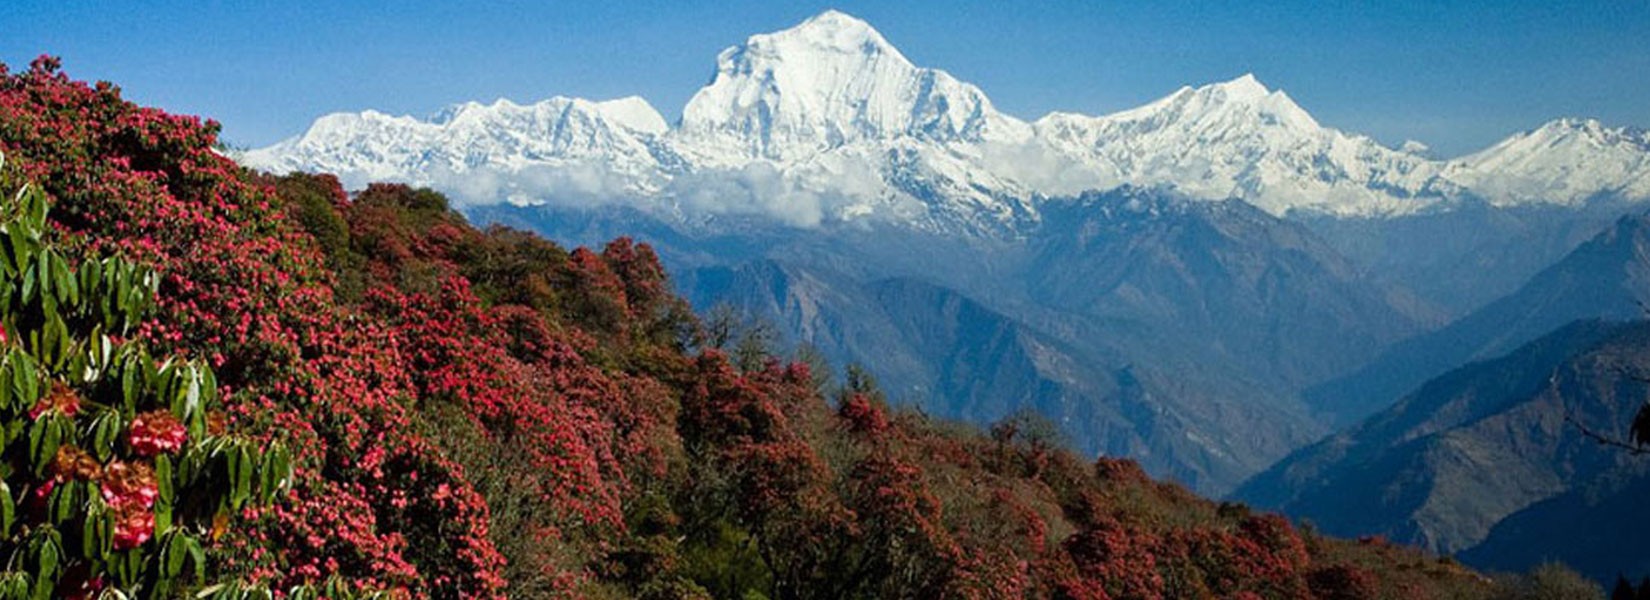 Trekking In Nepal.